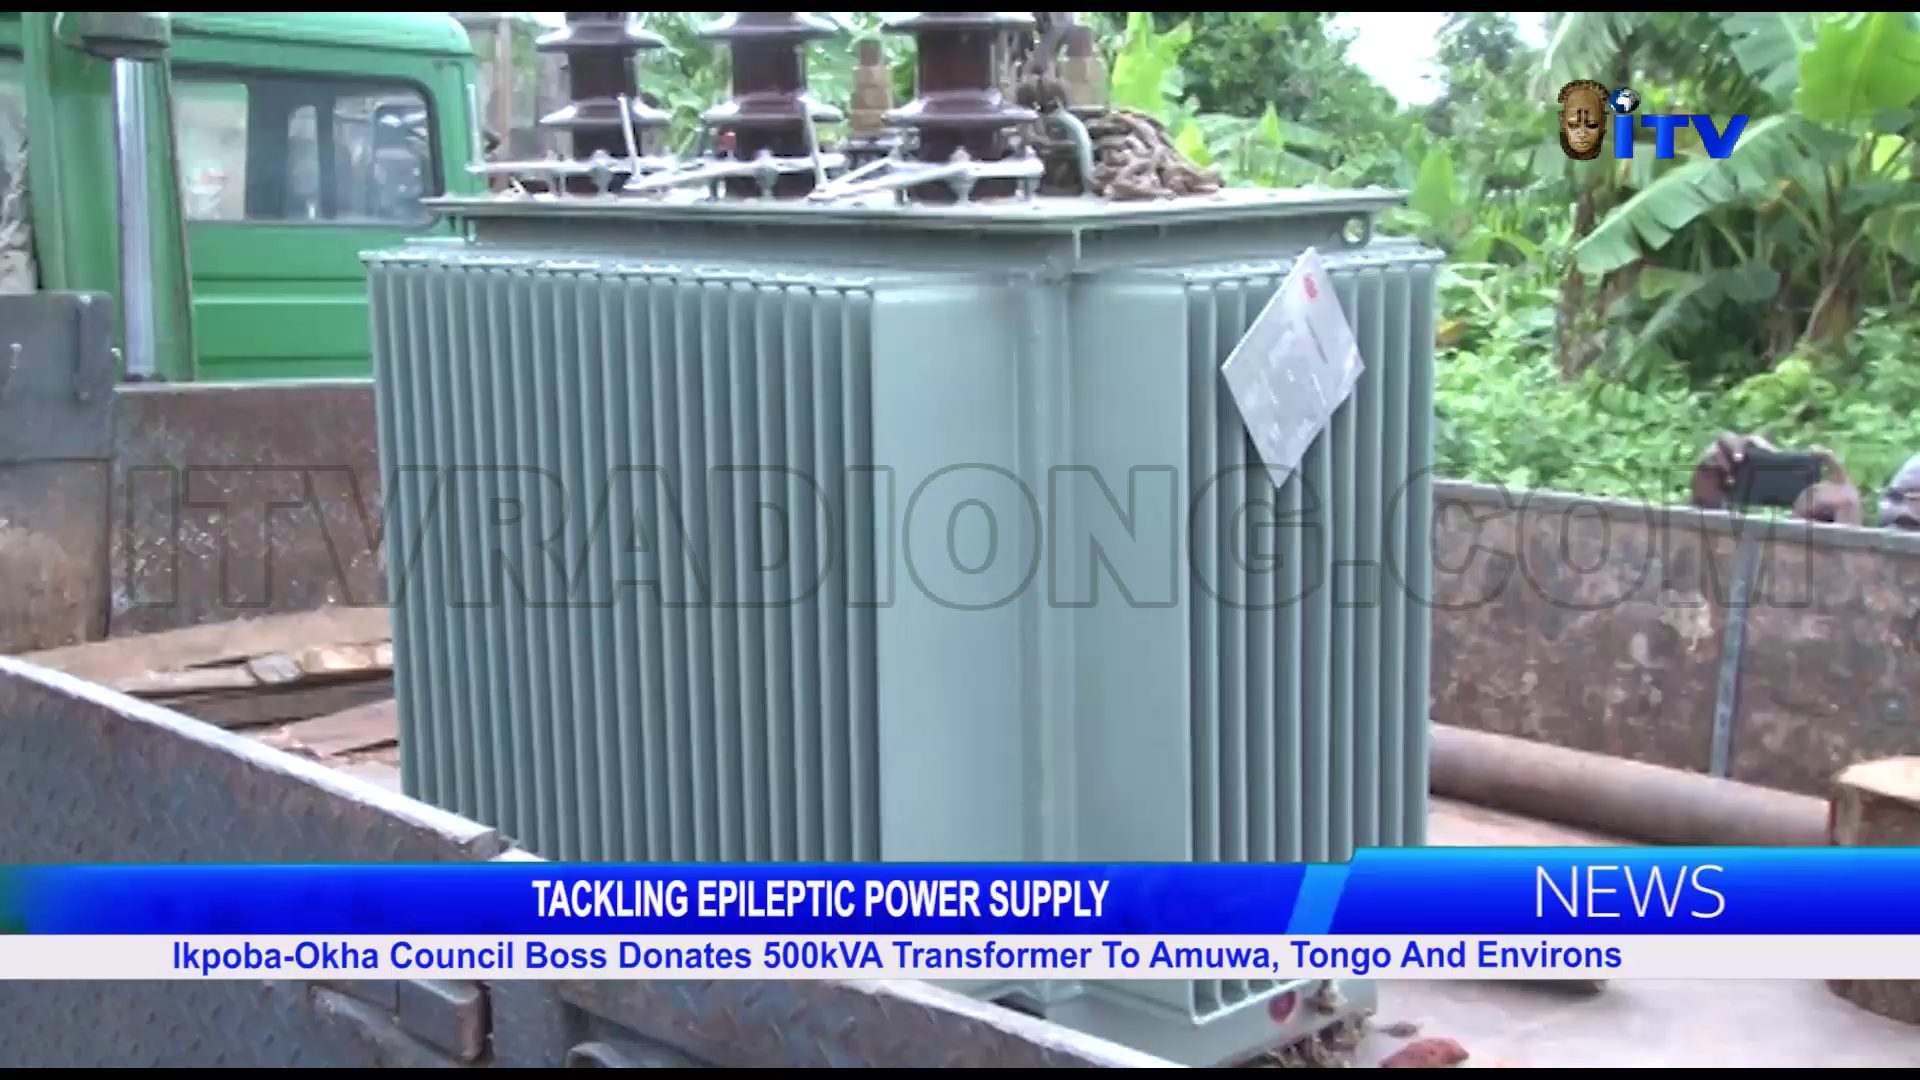 Ikpoba-Okha Council Boss Donates 500kVA Transformer To Amuwa, Tongo And Environs